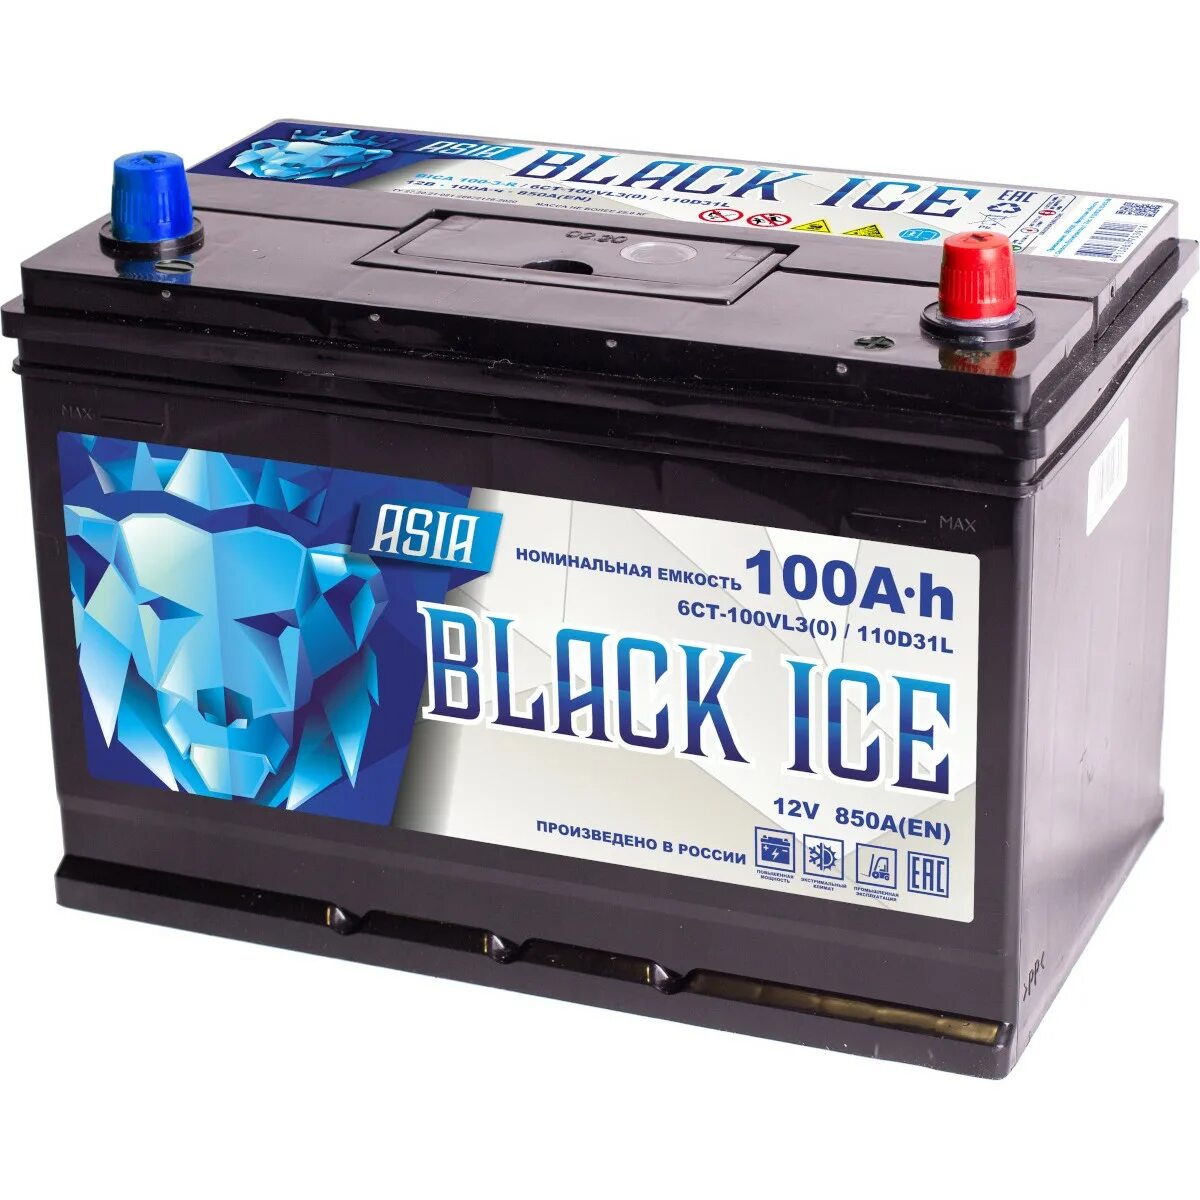 Аккумулятор Black Ice 6ст. Black Ice Pro 75d26r. Black Ice 75 аккумулятор. Аккумулятор. Отзывы Black Ice 100 Ah. Отзывы о аккумуляторах автомобильных